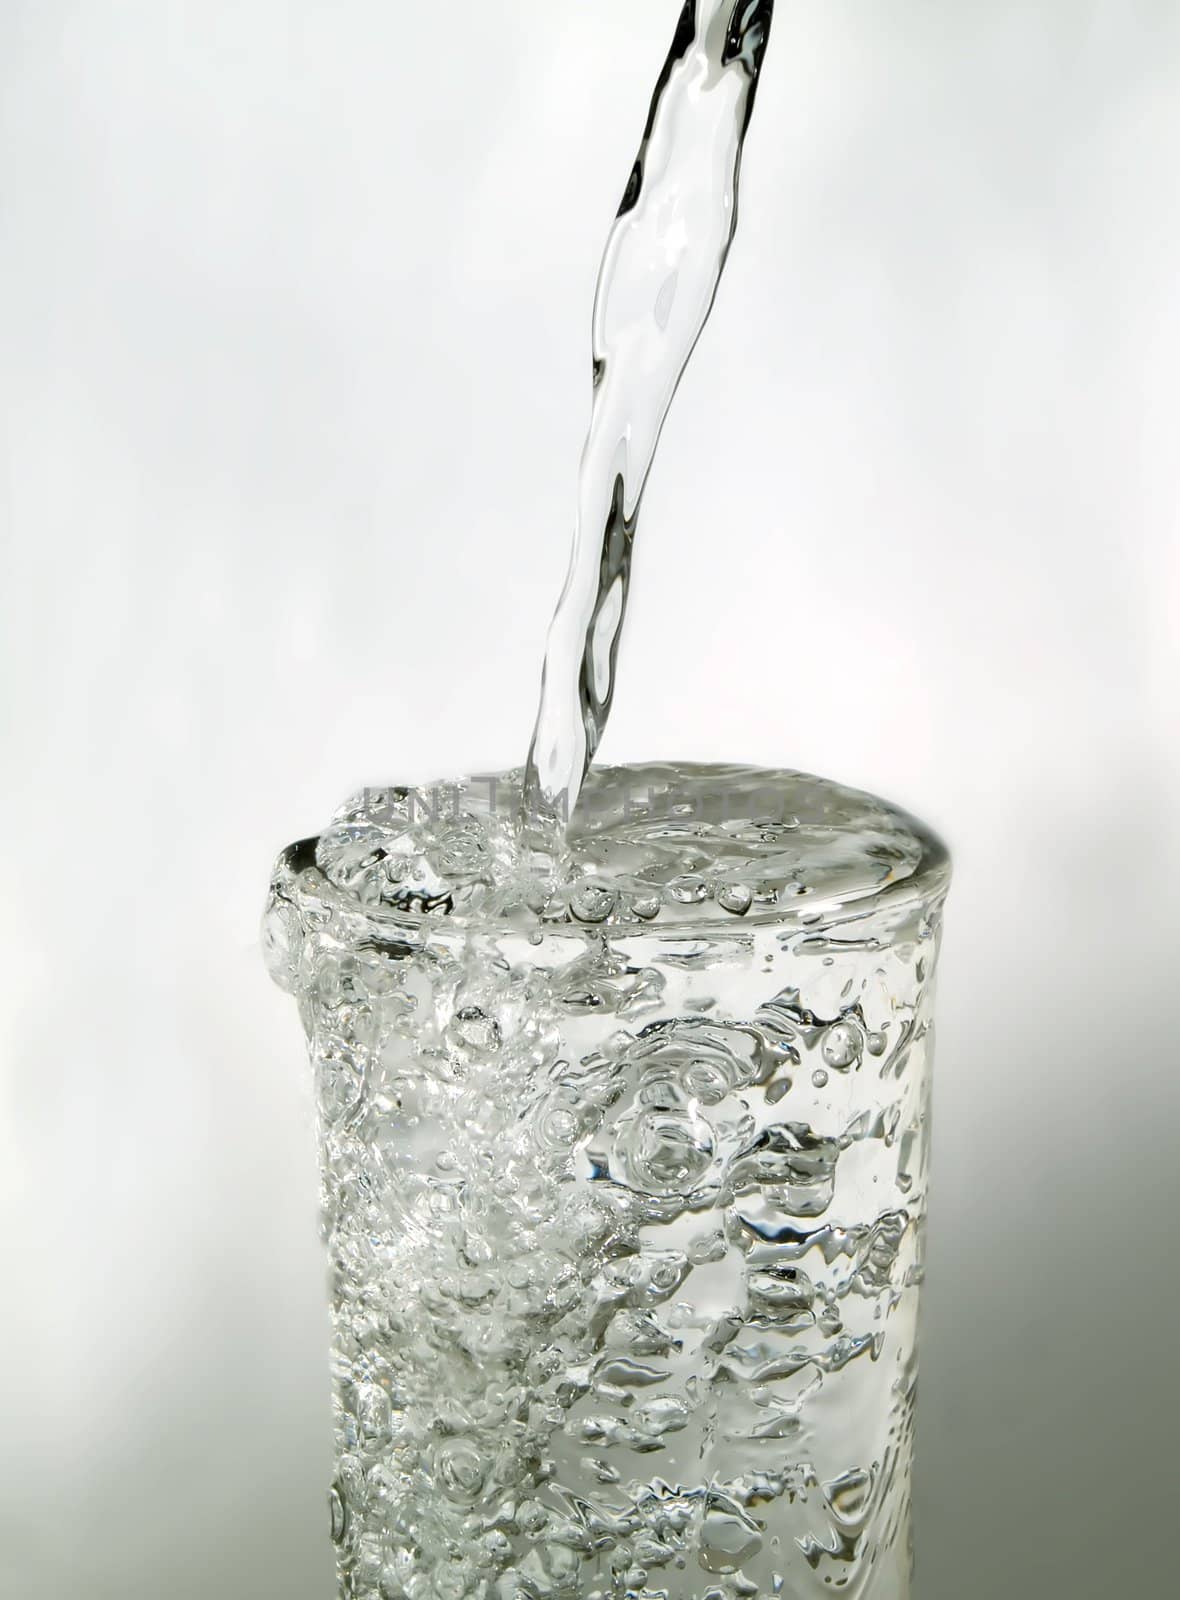 Glass of water by henrischmit